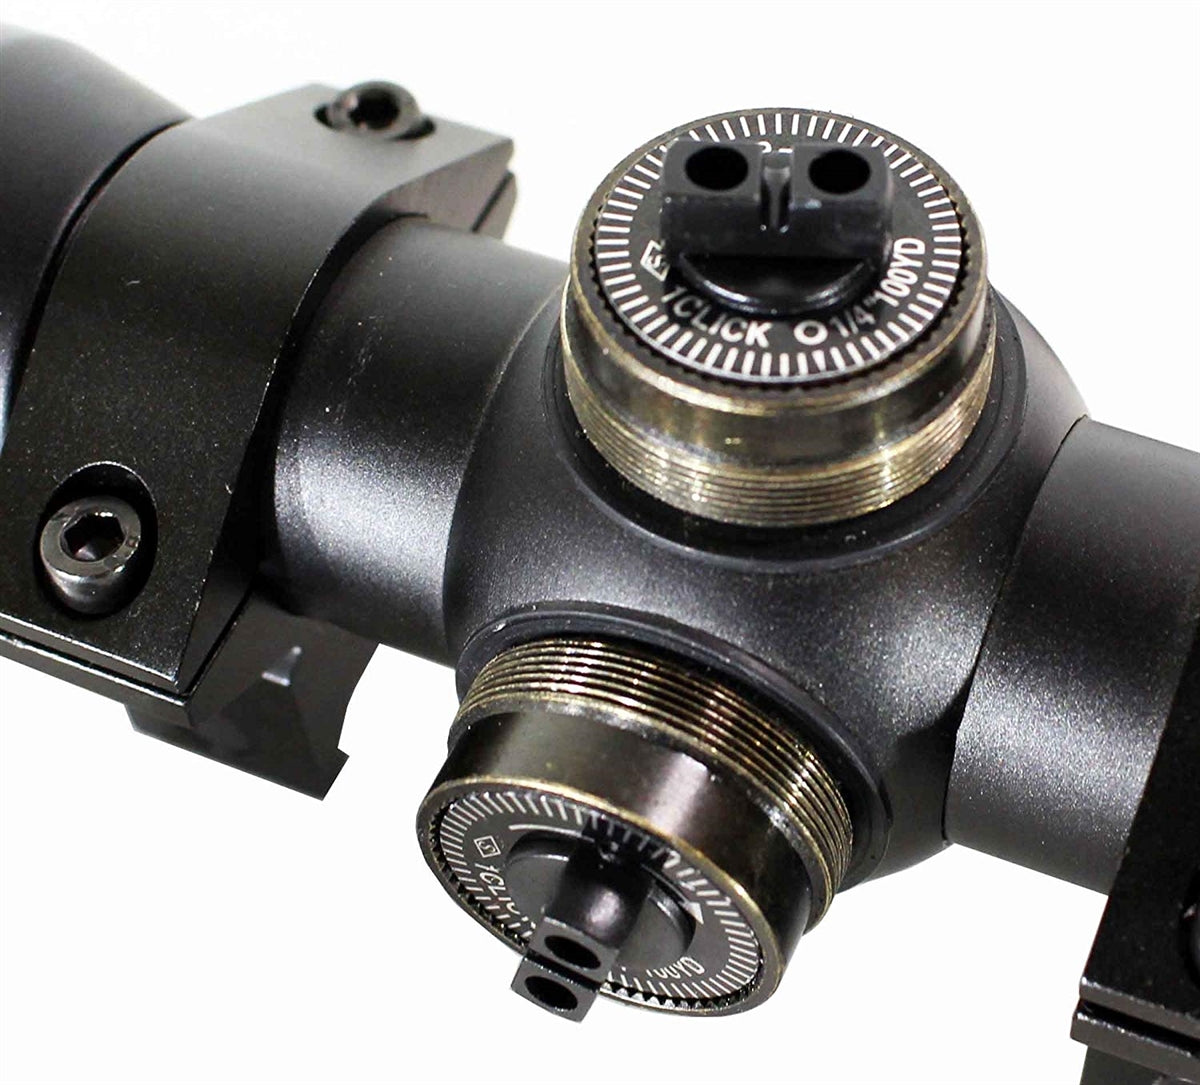 4x32 scope sight for mossberg 500 12 gauge pump.